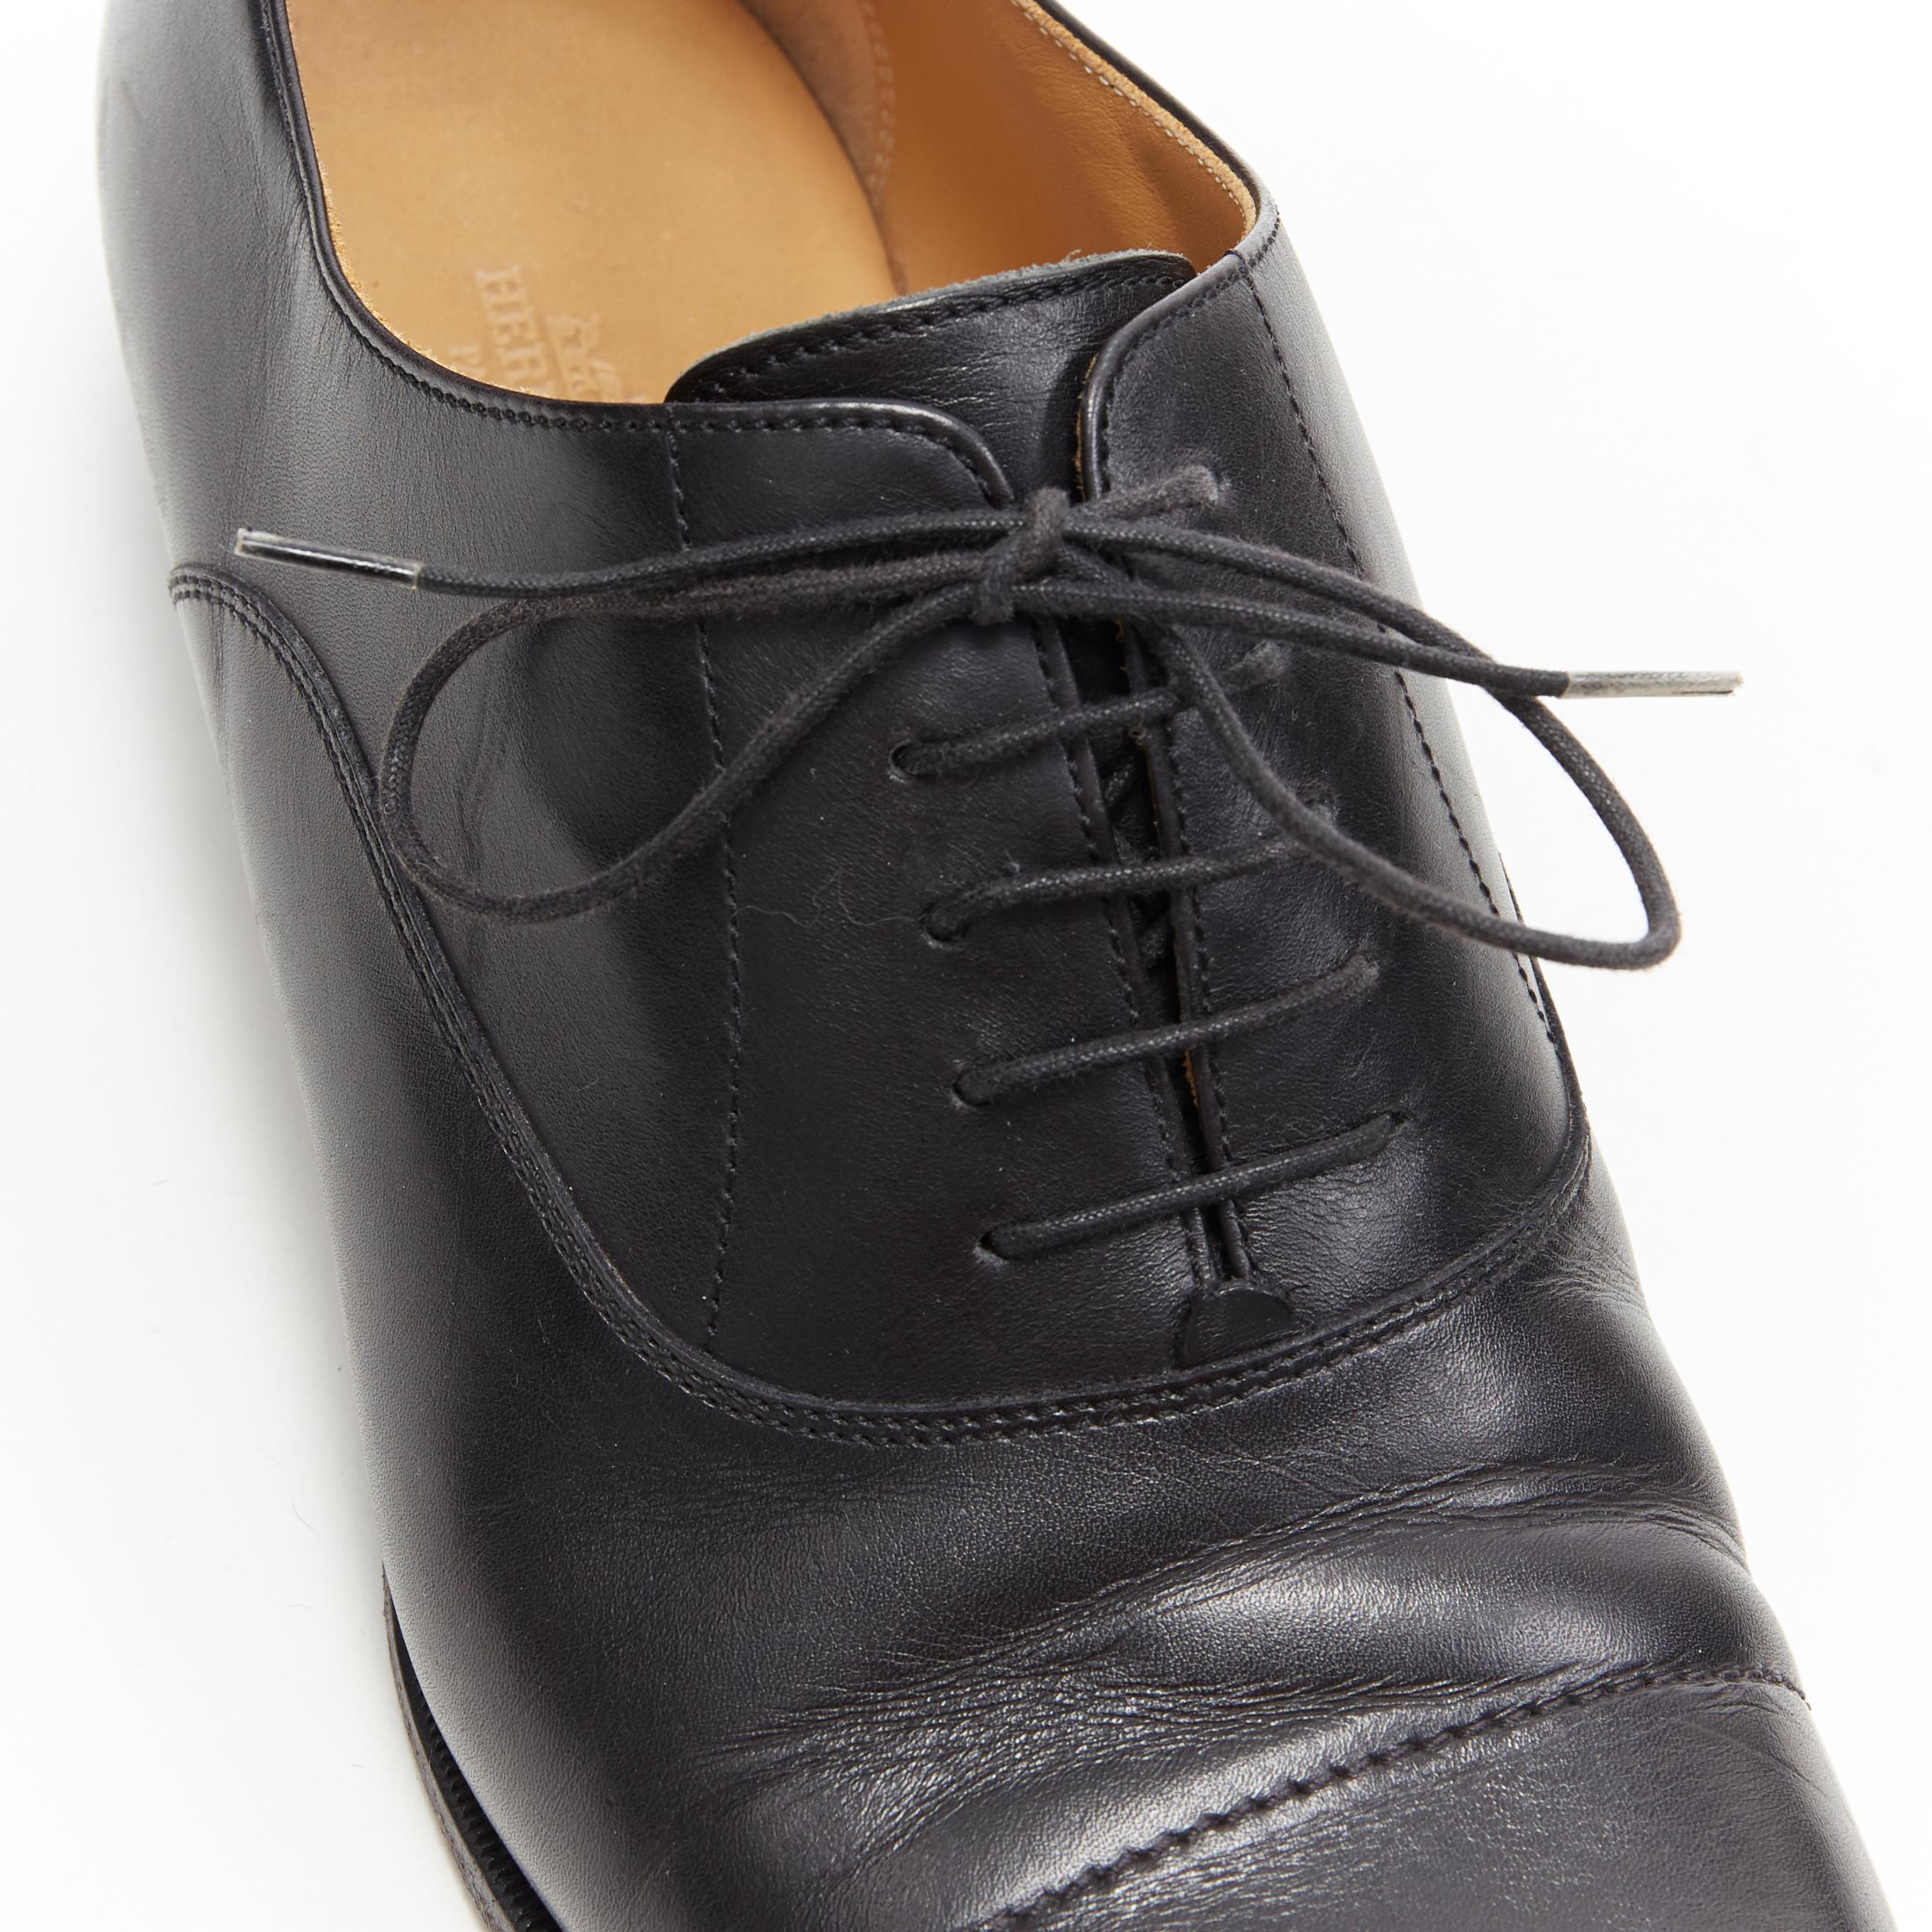 HERMES black calf leather 5-eyelet lace up derby oxford dress shoes EU43.5 3